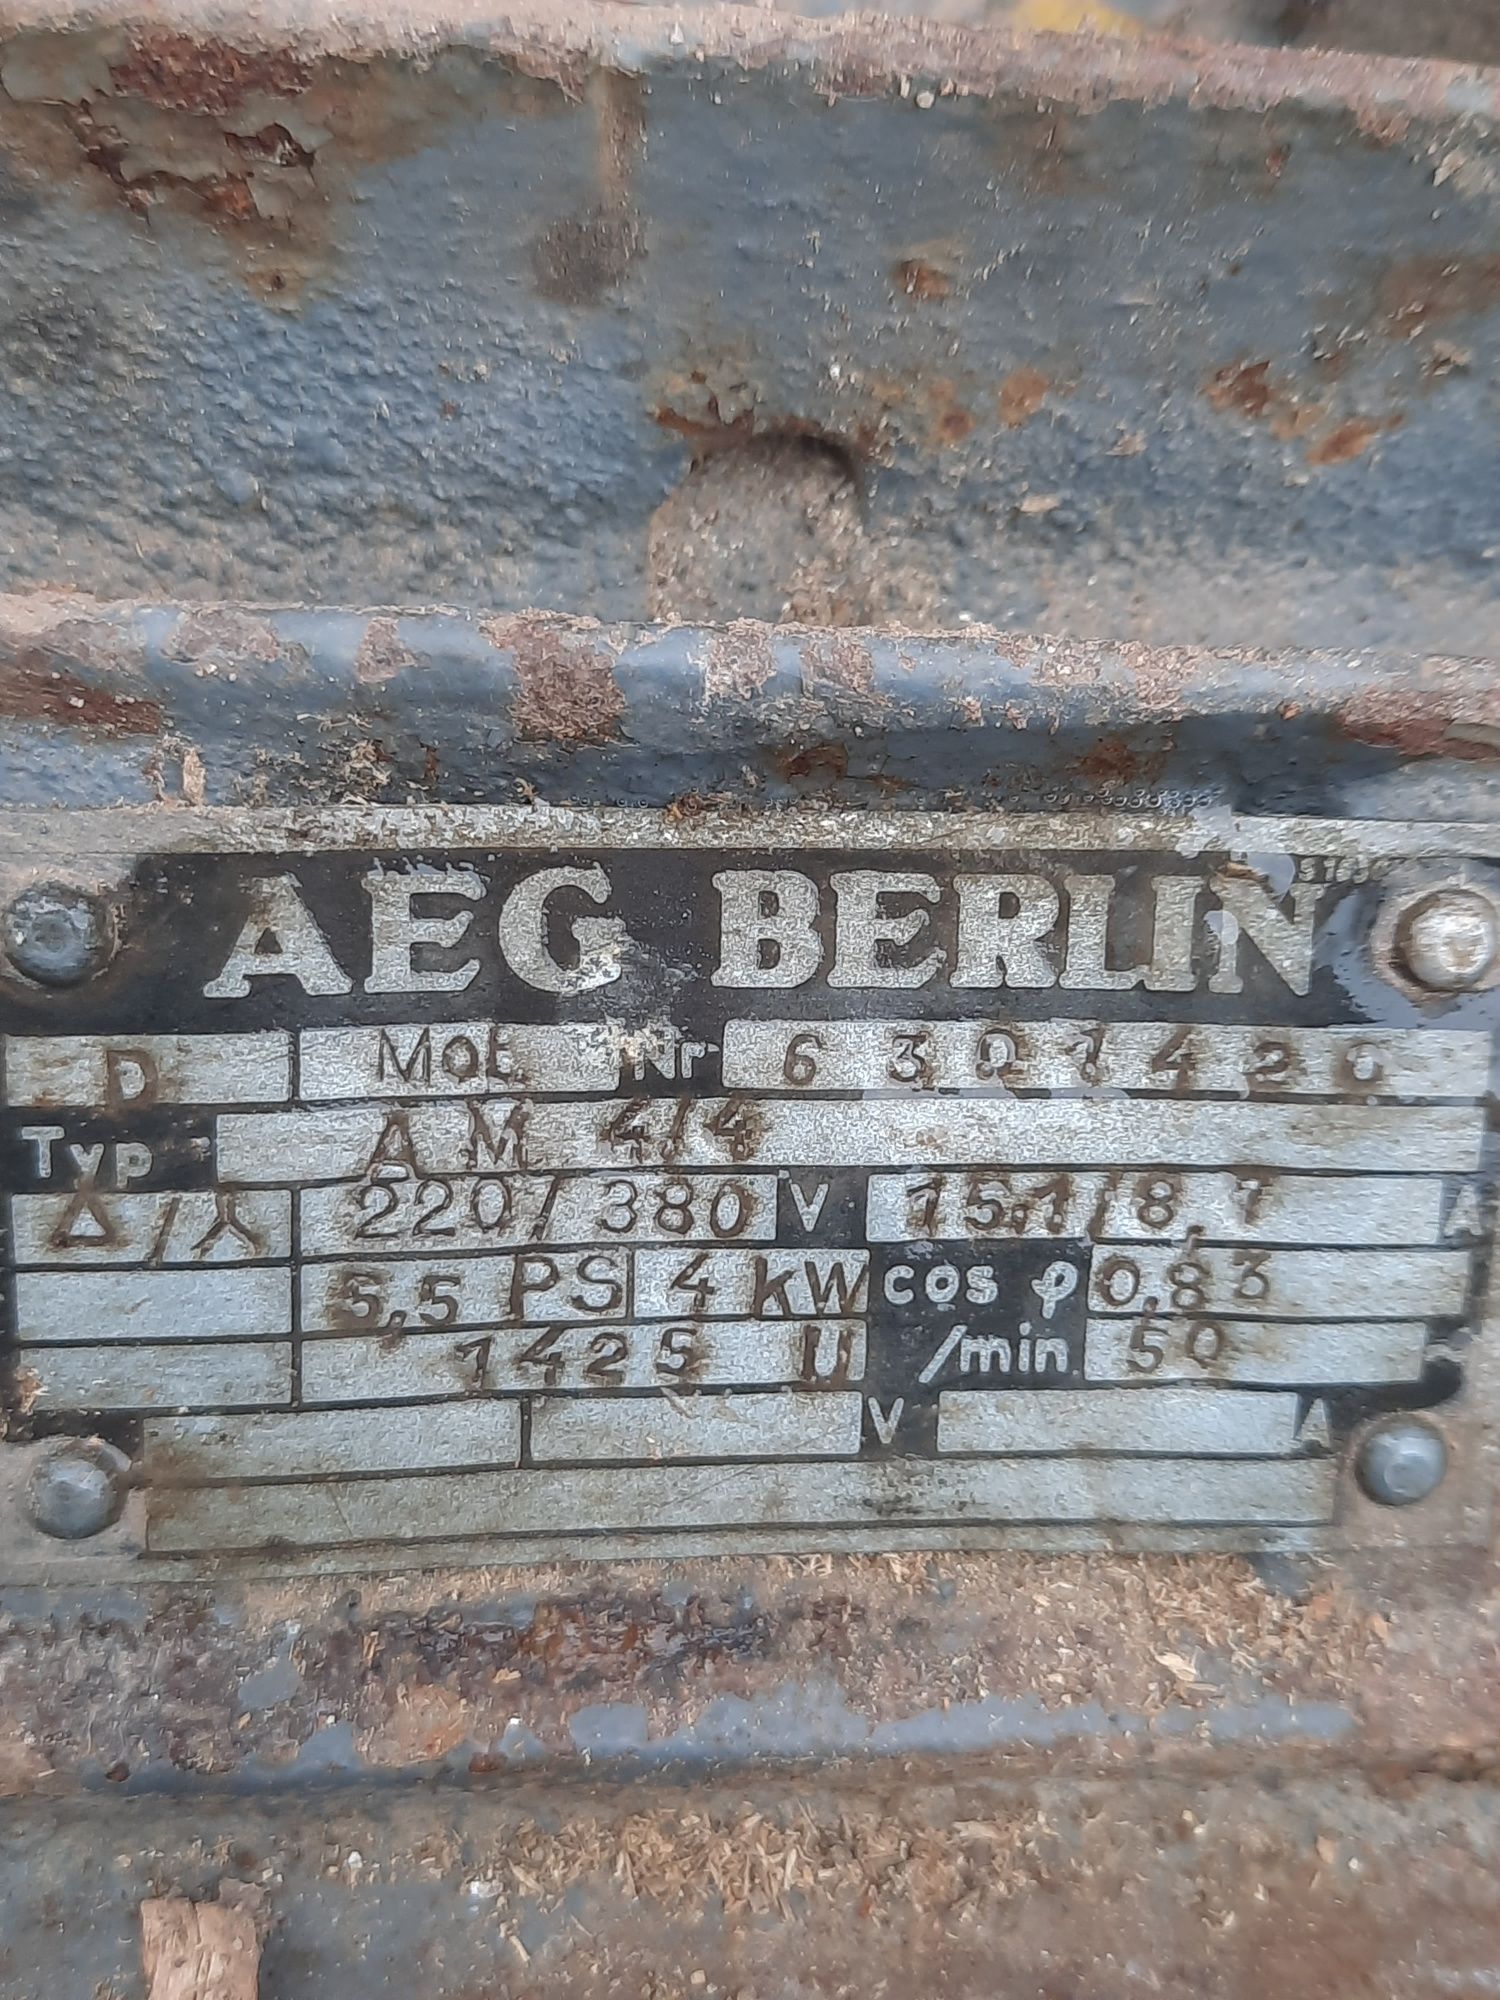 Motor trifazic AEG Berlin 4kw